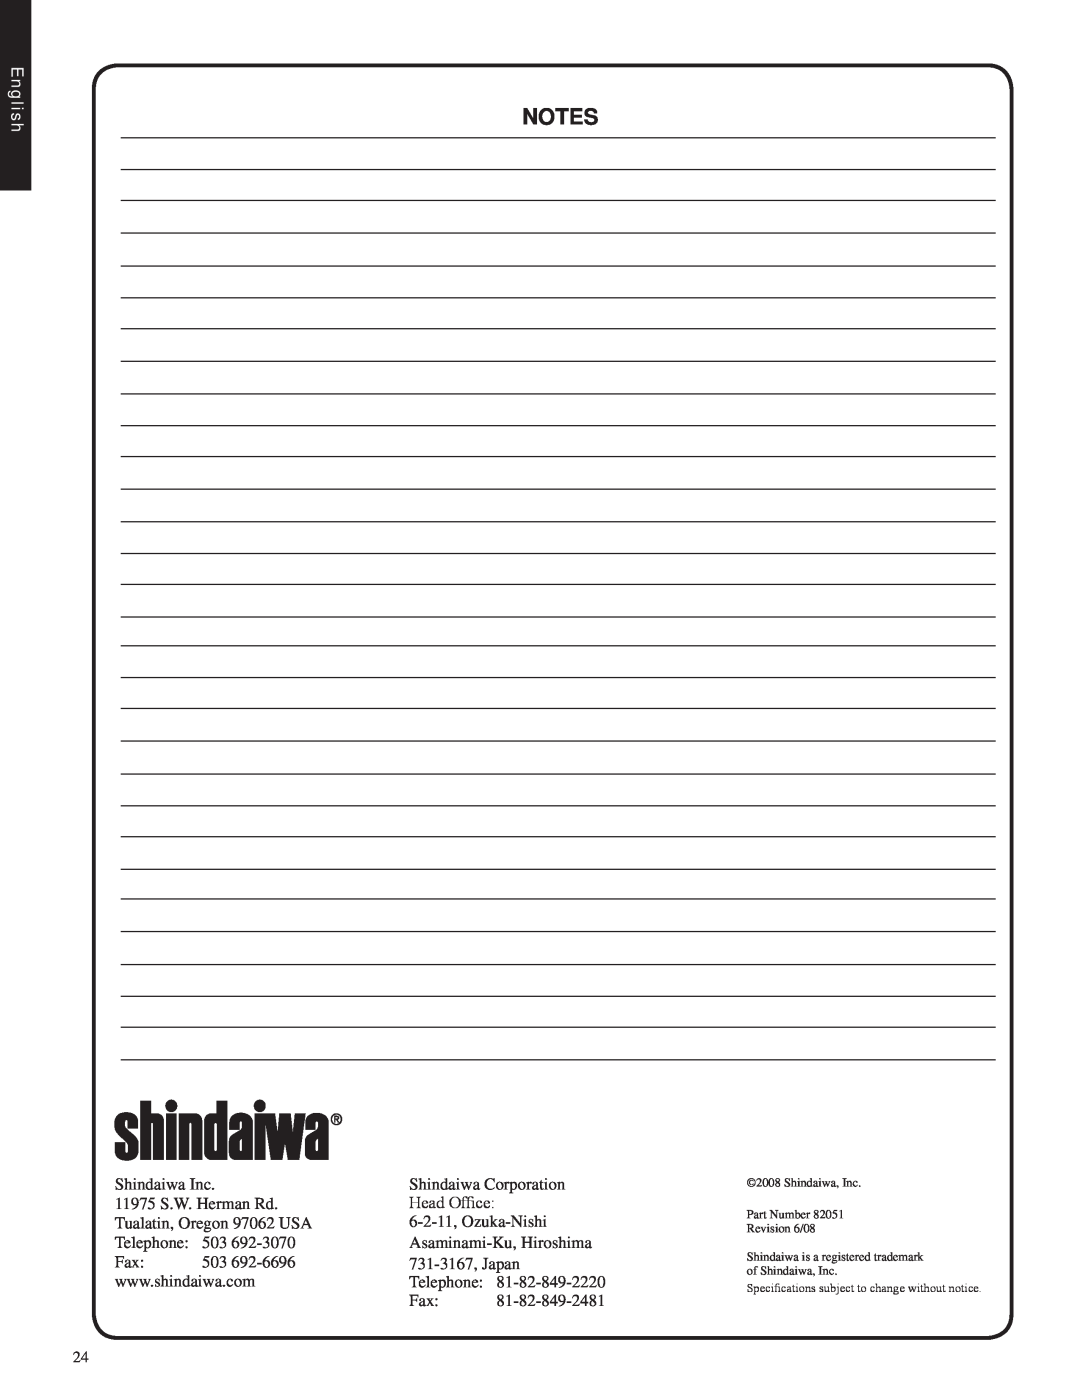 Shindaiwa EB212, 82051 manual notes, English, Shindaiwa Inc 